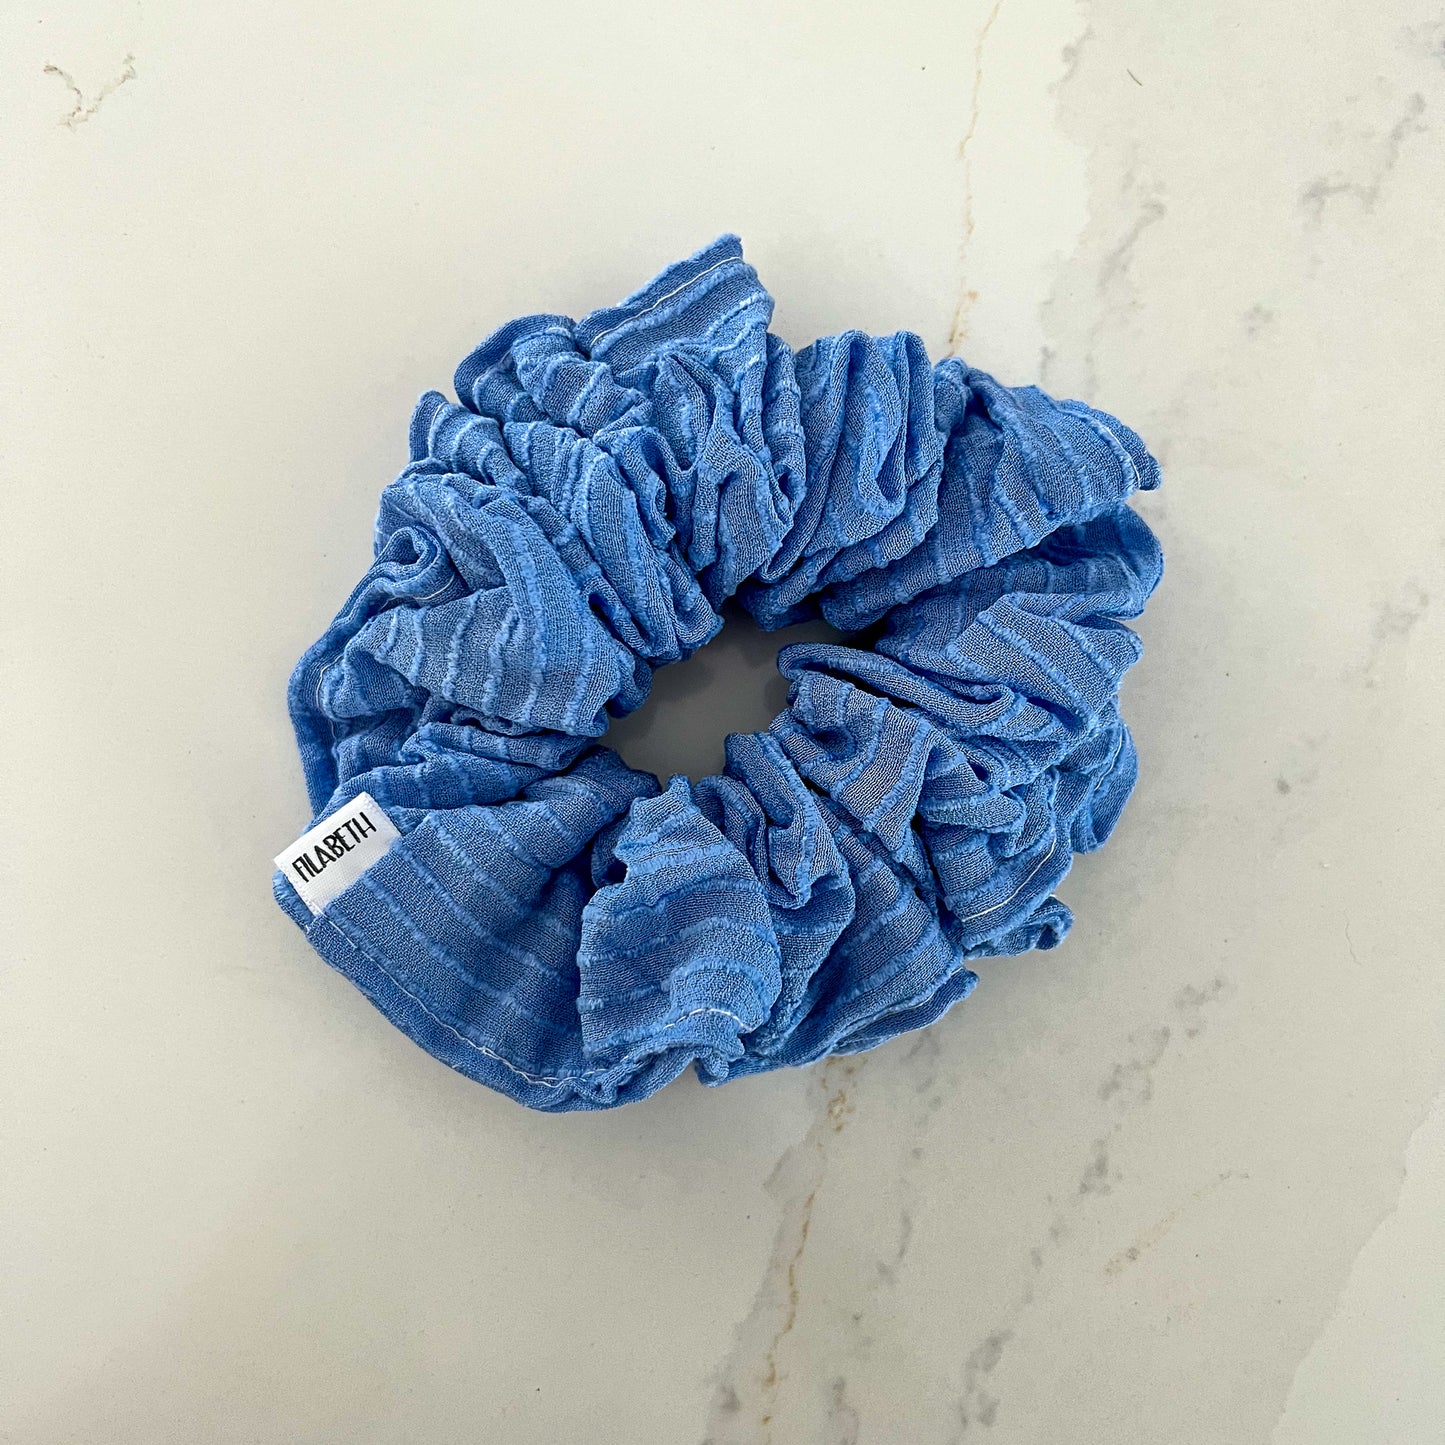 Bleu texturé - Extra fluffy